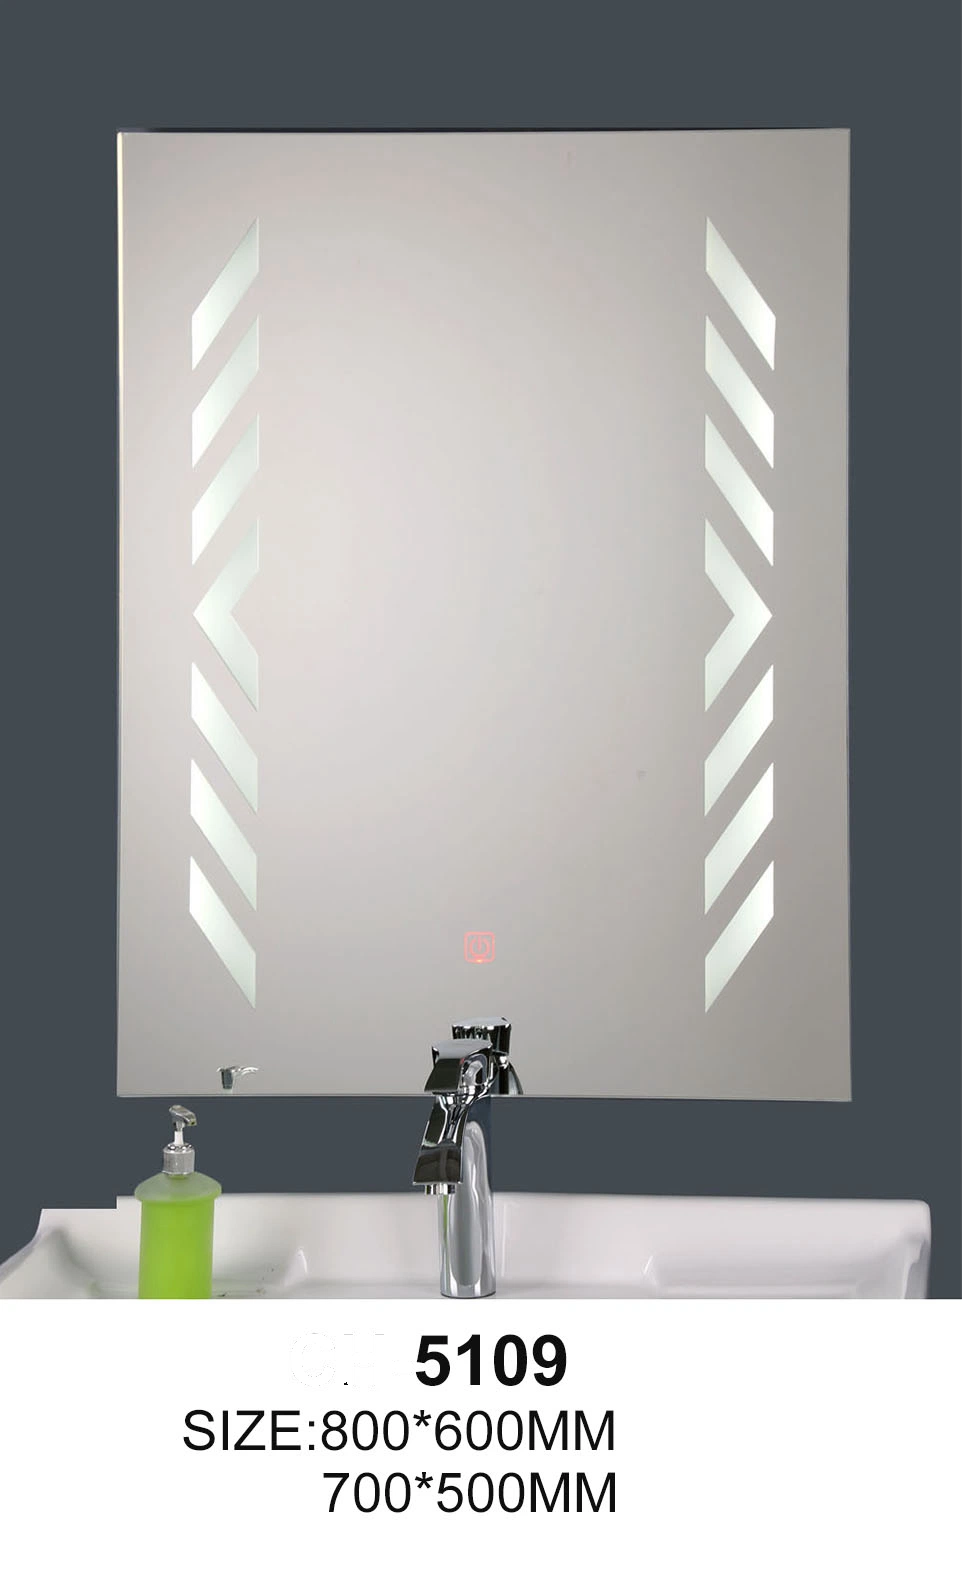 LED Illuminated Saber Certificate Wall Bathroom Smart Mirror